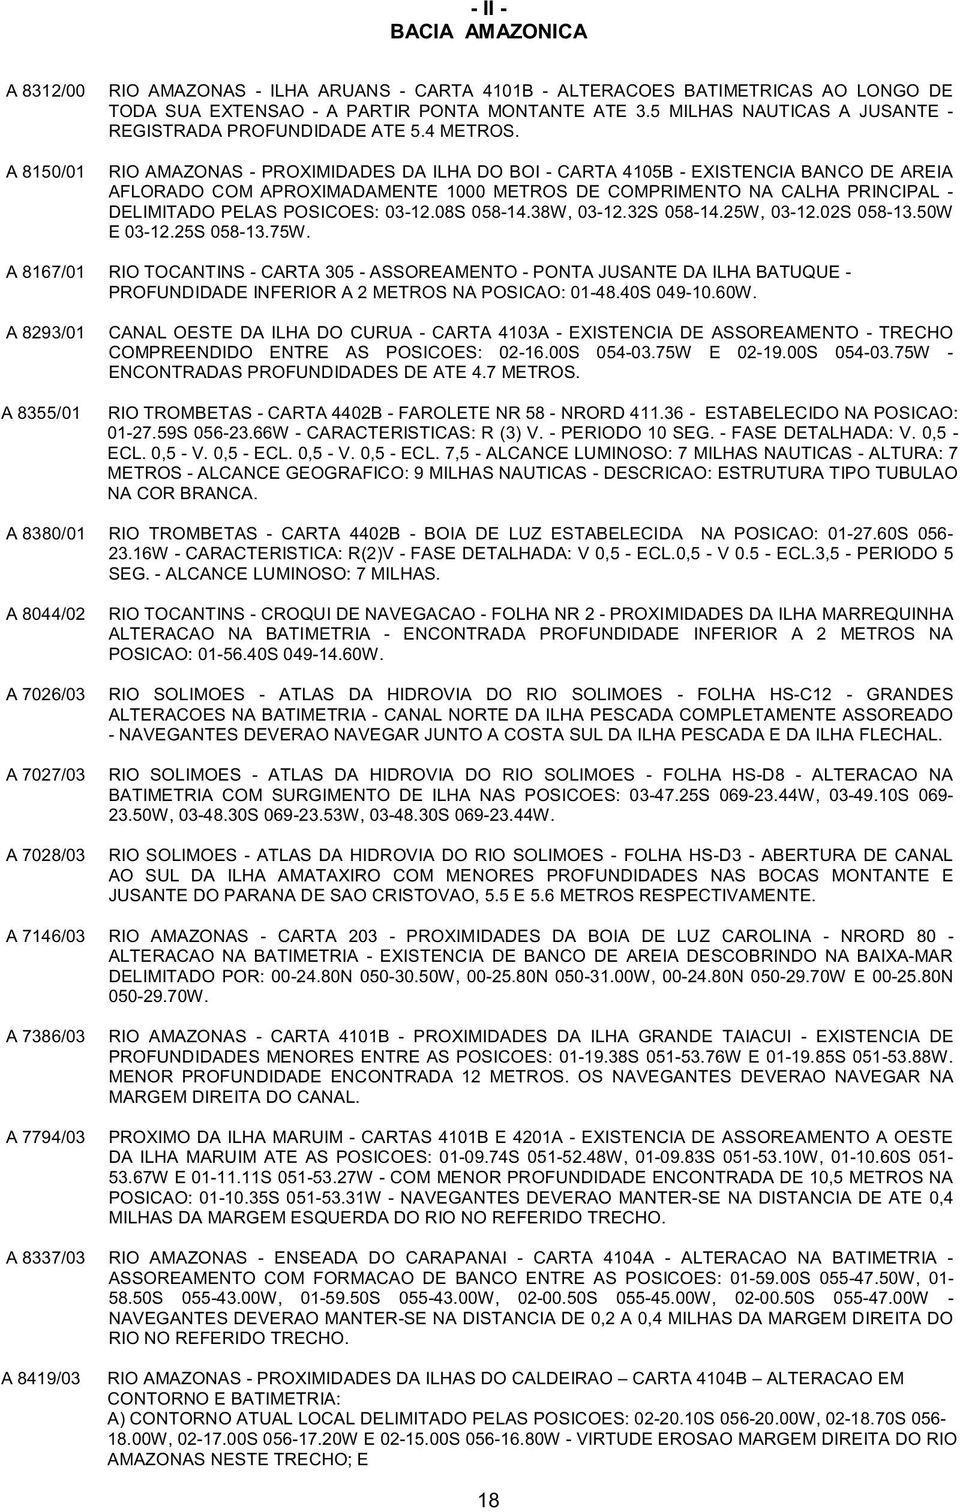 RIO AMAZONAS - PROXIMIDADES DA ILHA DO BOI - CARTA 4105B - EXISTENCIA BANCO DE AREIA AFLORADO COM APROXIMADAMENTE 1000 METROS DE COMPRIMENTO NA CALHA PRINCIPAL - DELIMITADO PELAS POSICOES: 03-12.